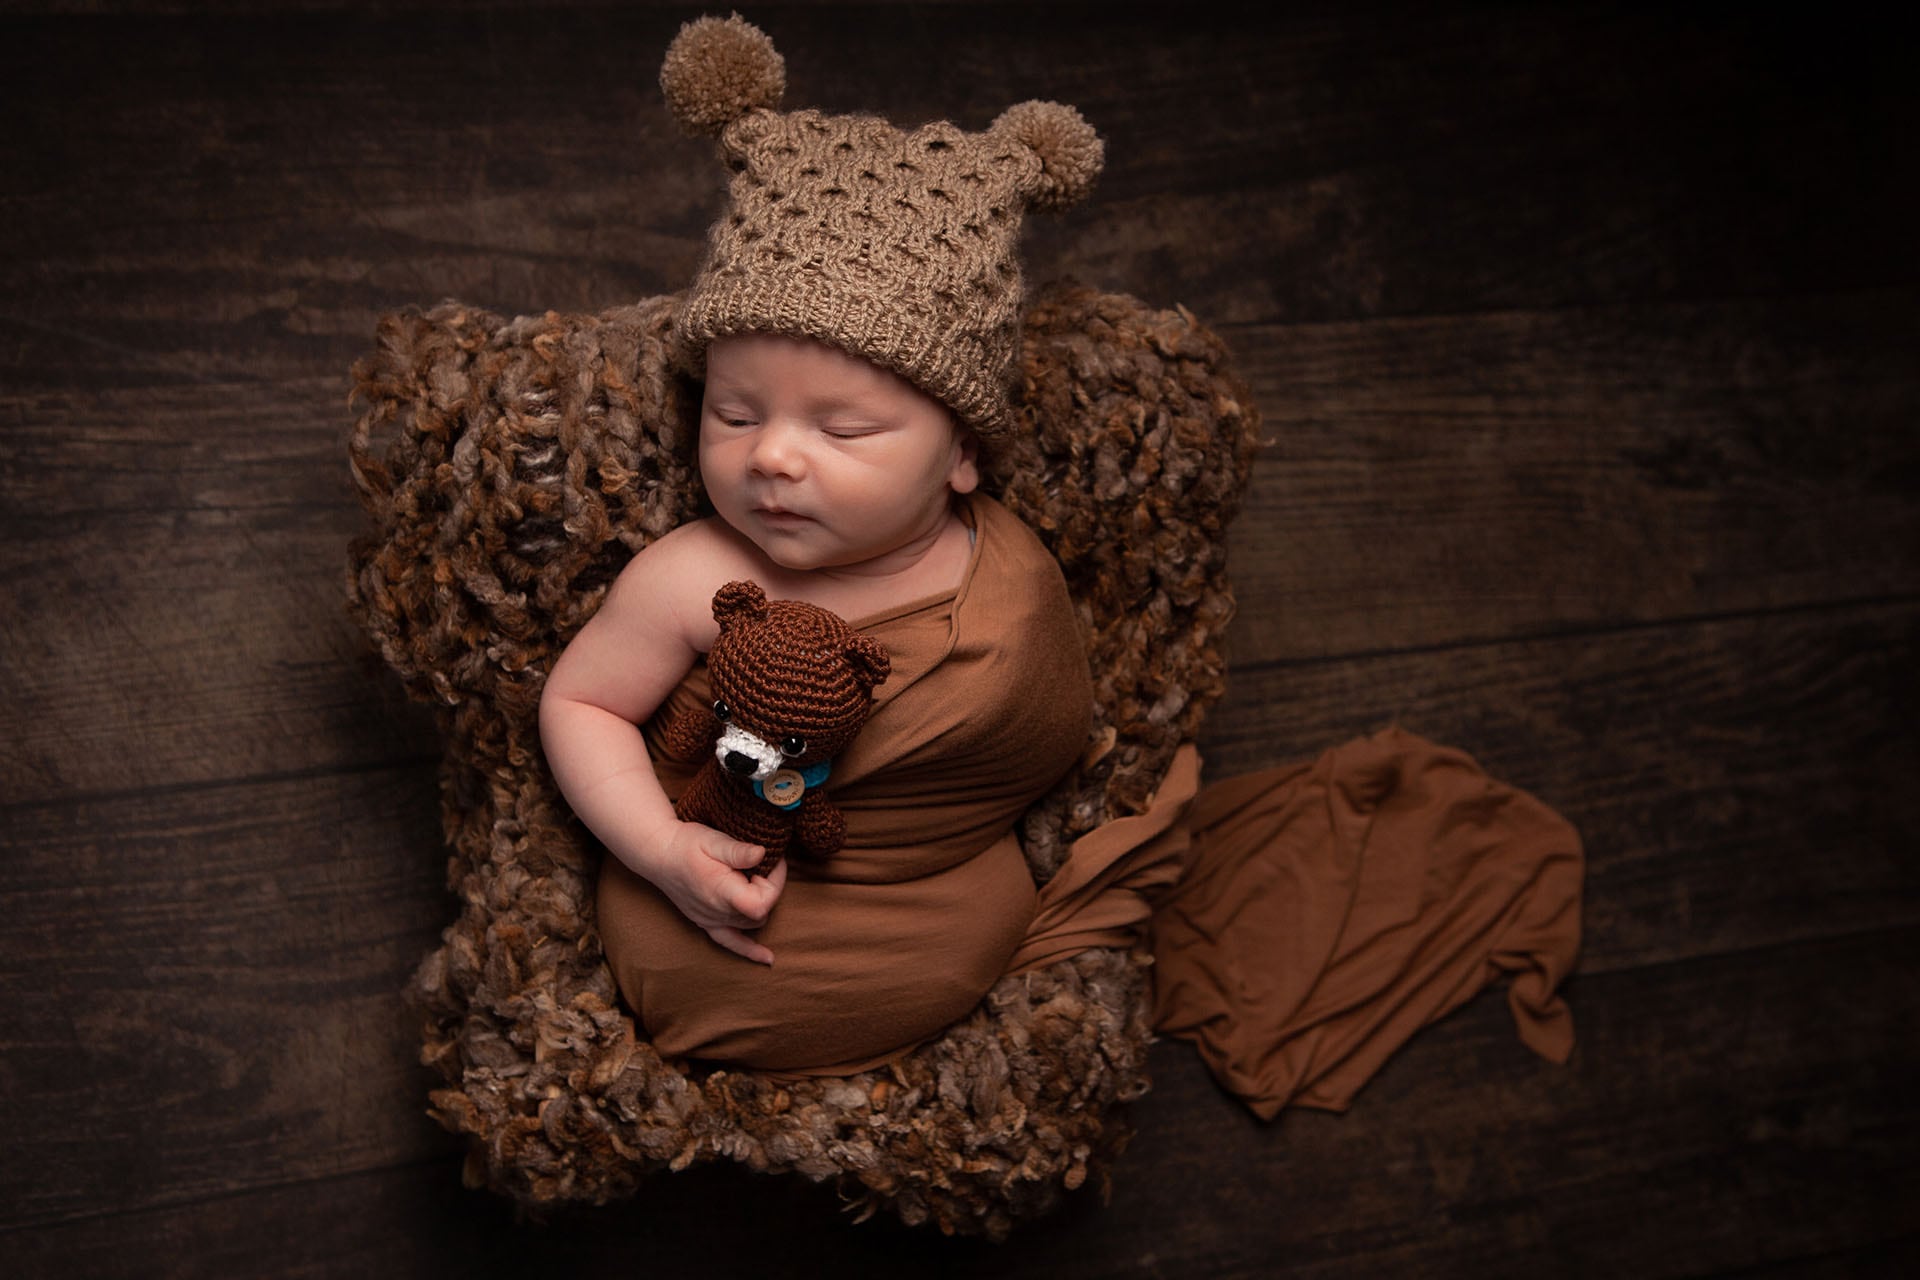 A newborn baby sleeping in a brown blanket with a teddy bear.